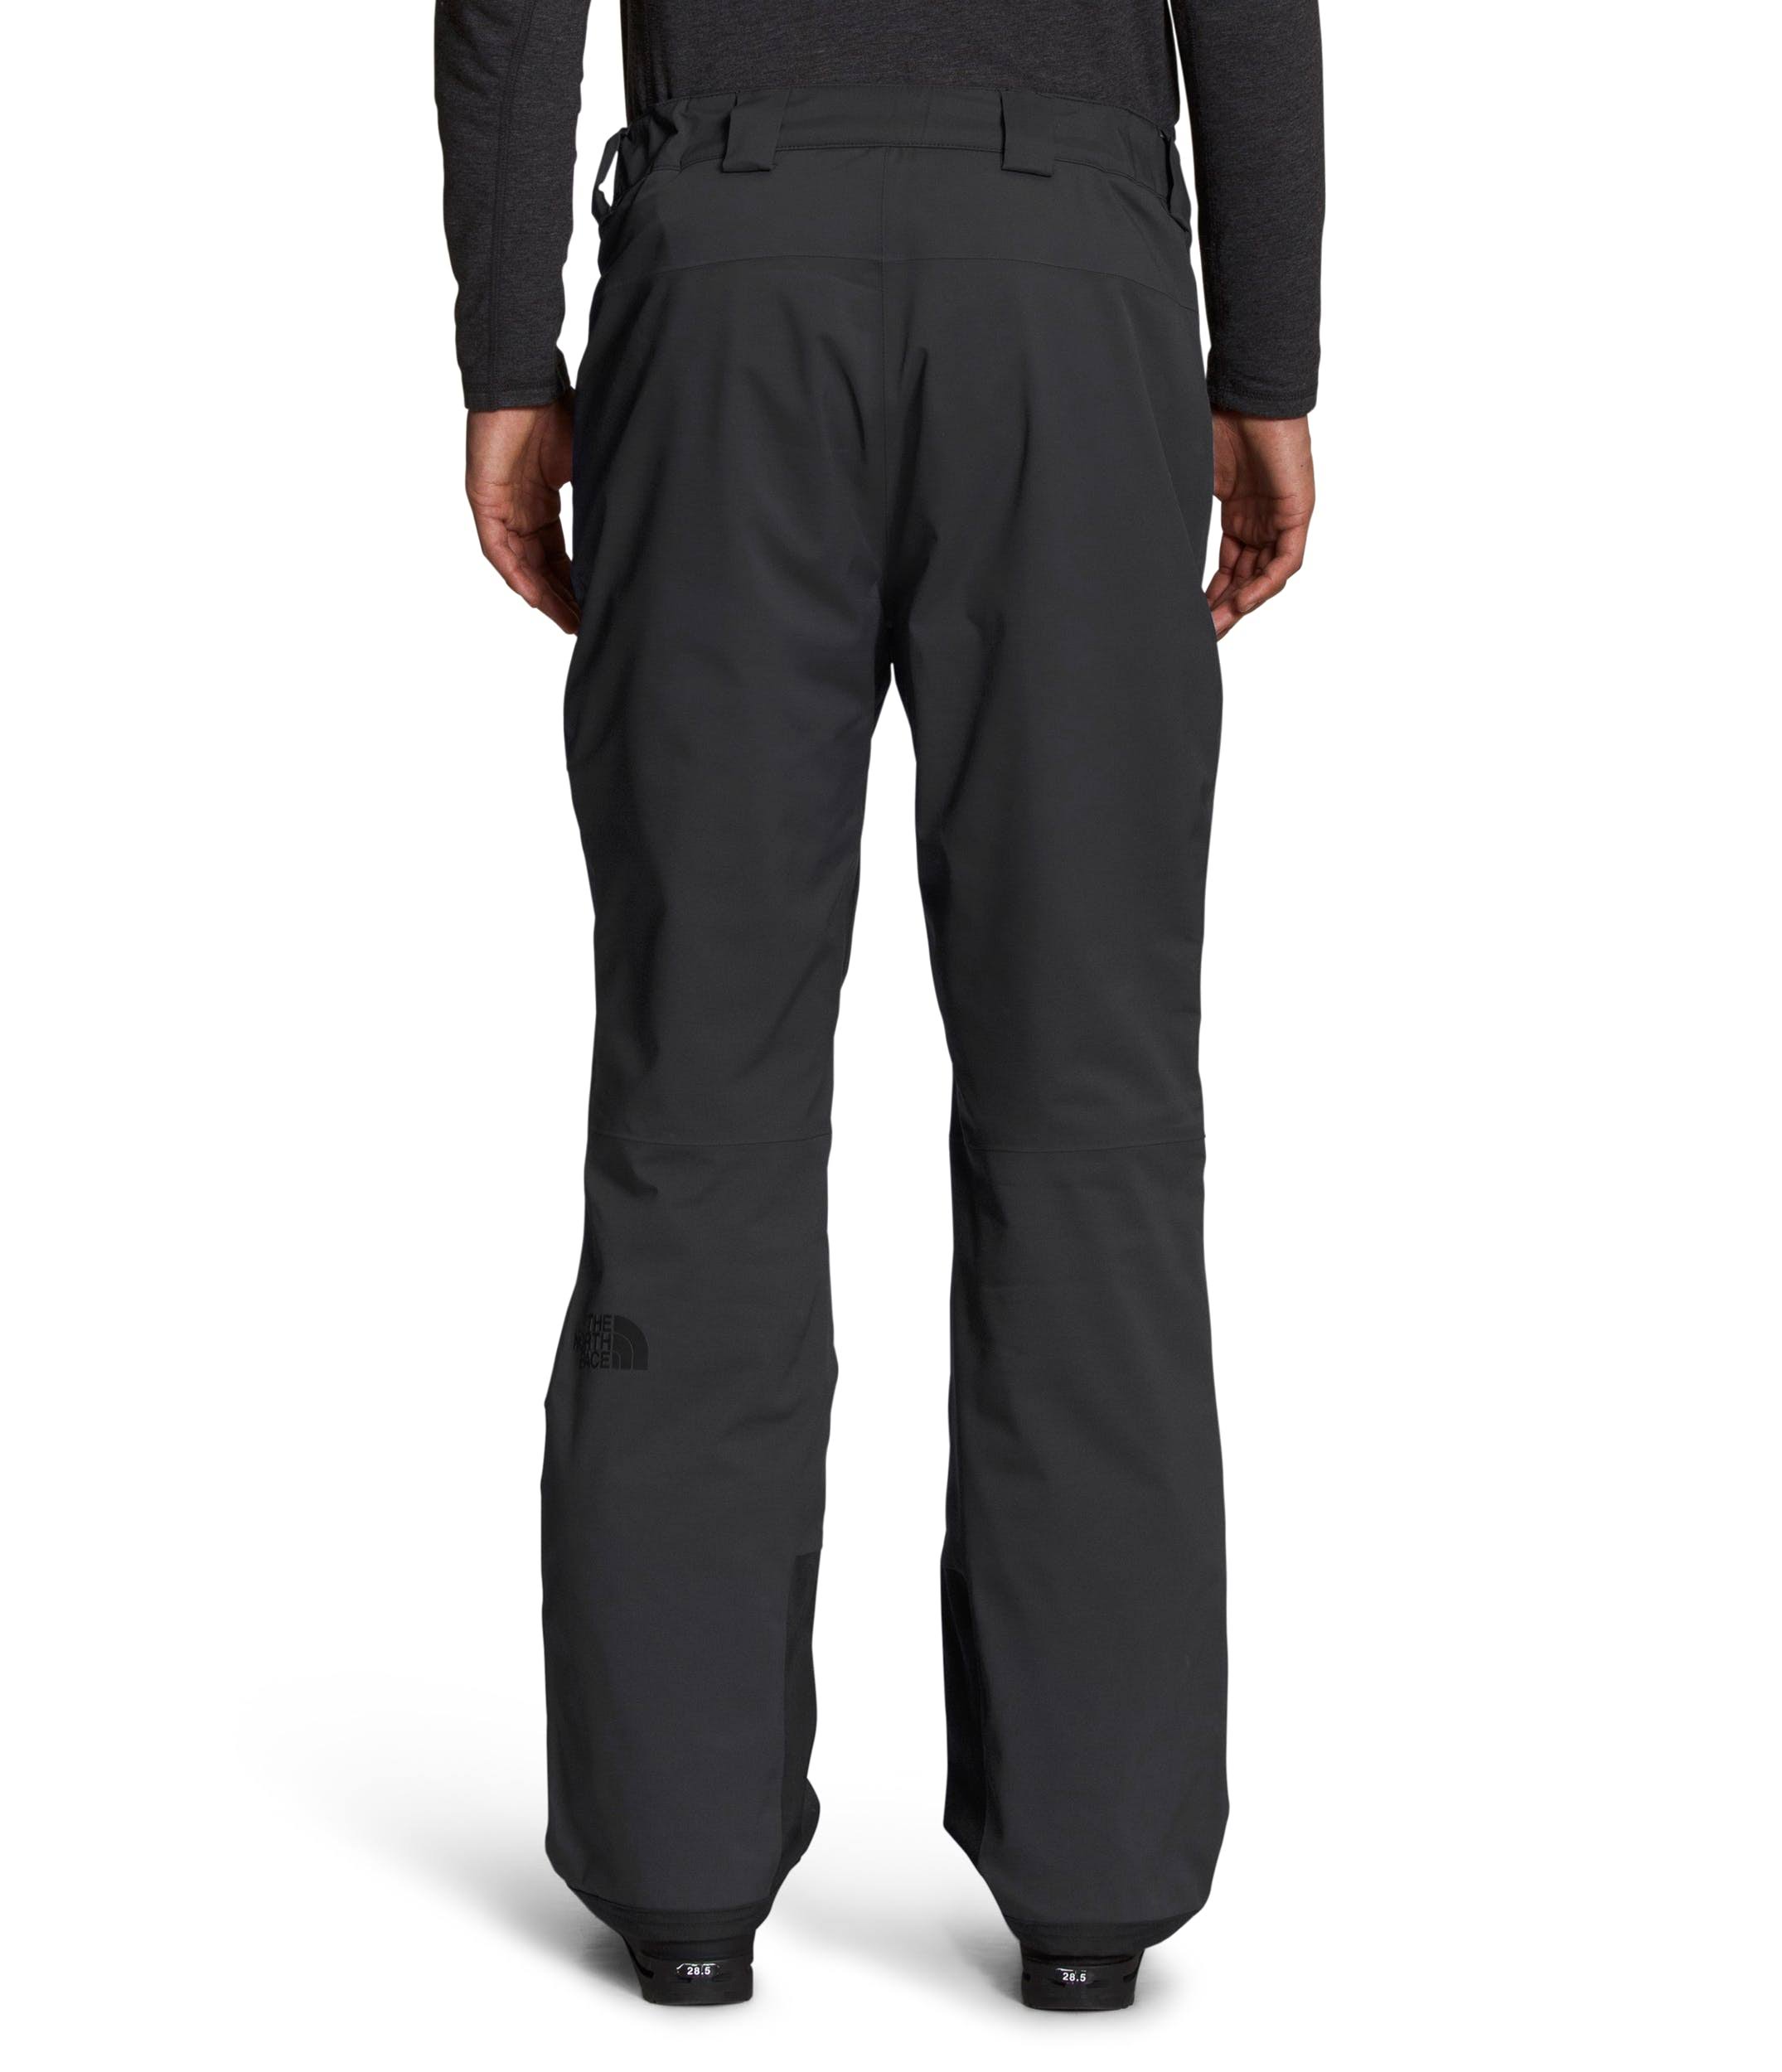 The North Face Chakal Pant Men's - Asphalt Grey - Large